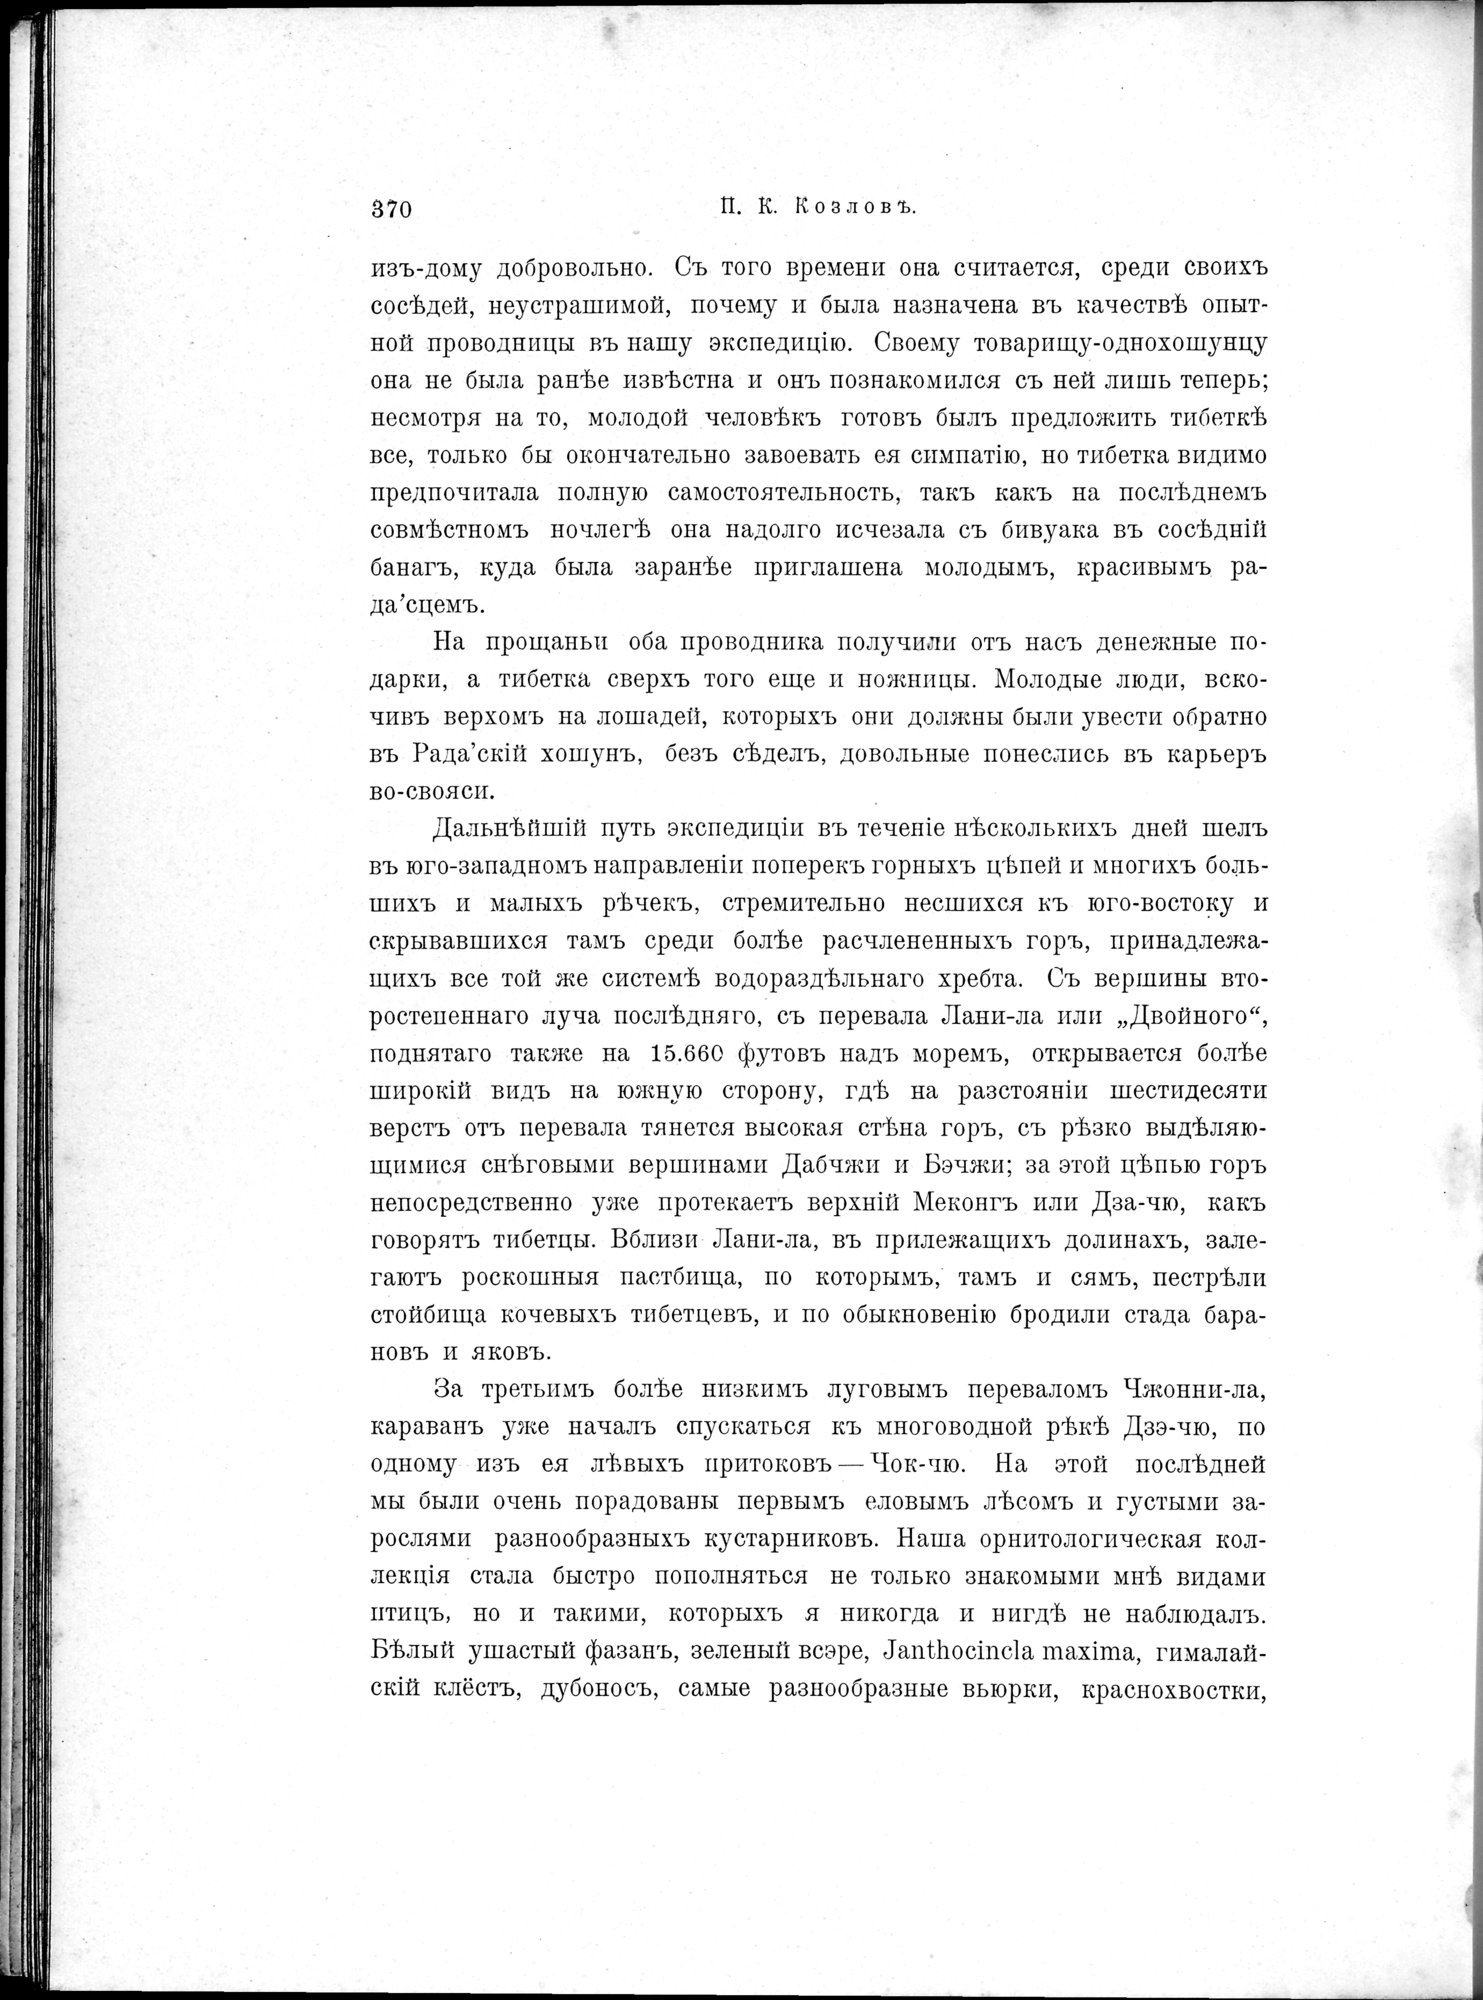 Mongoliia i Kam : vol.2 / Page 156 (Grayscale High Resolution Image)